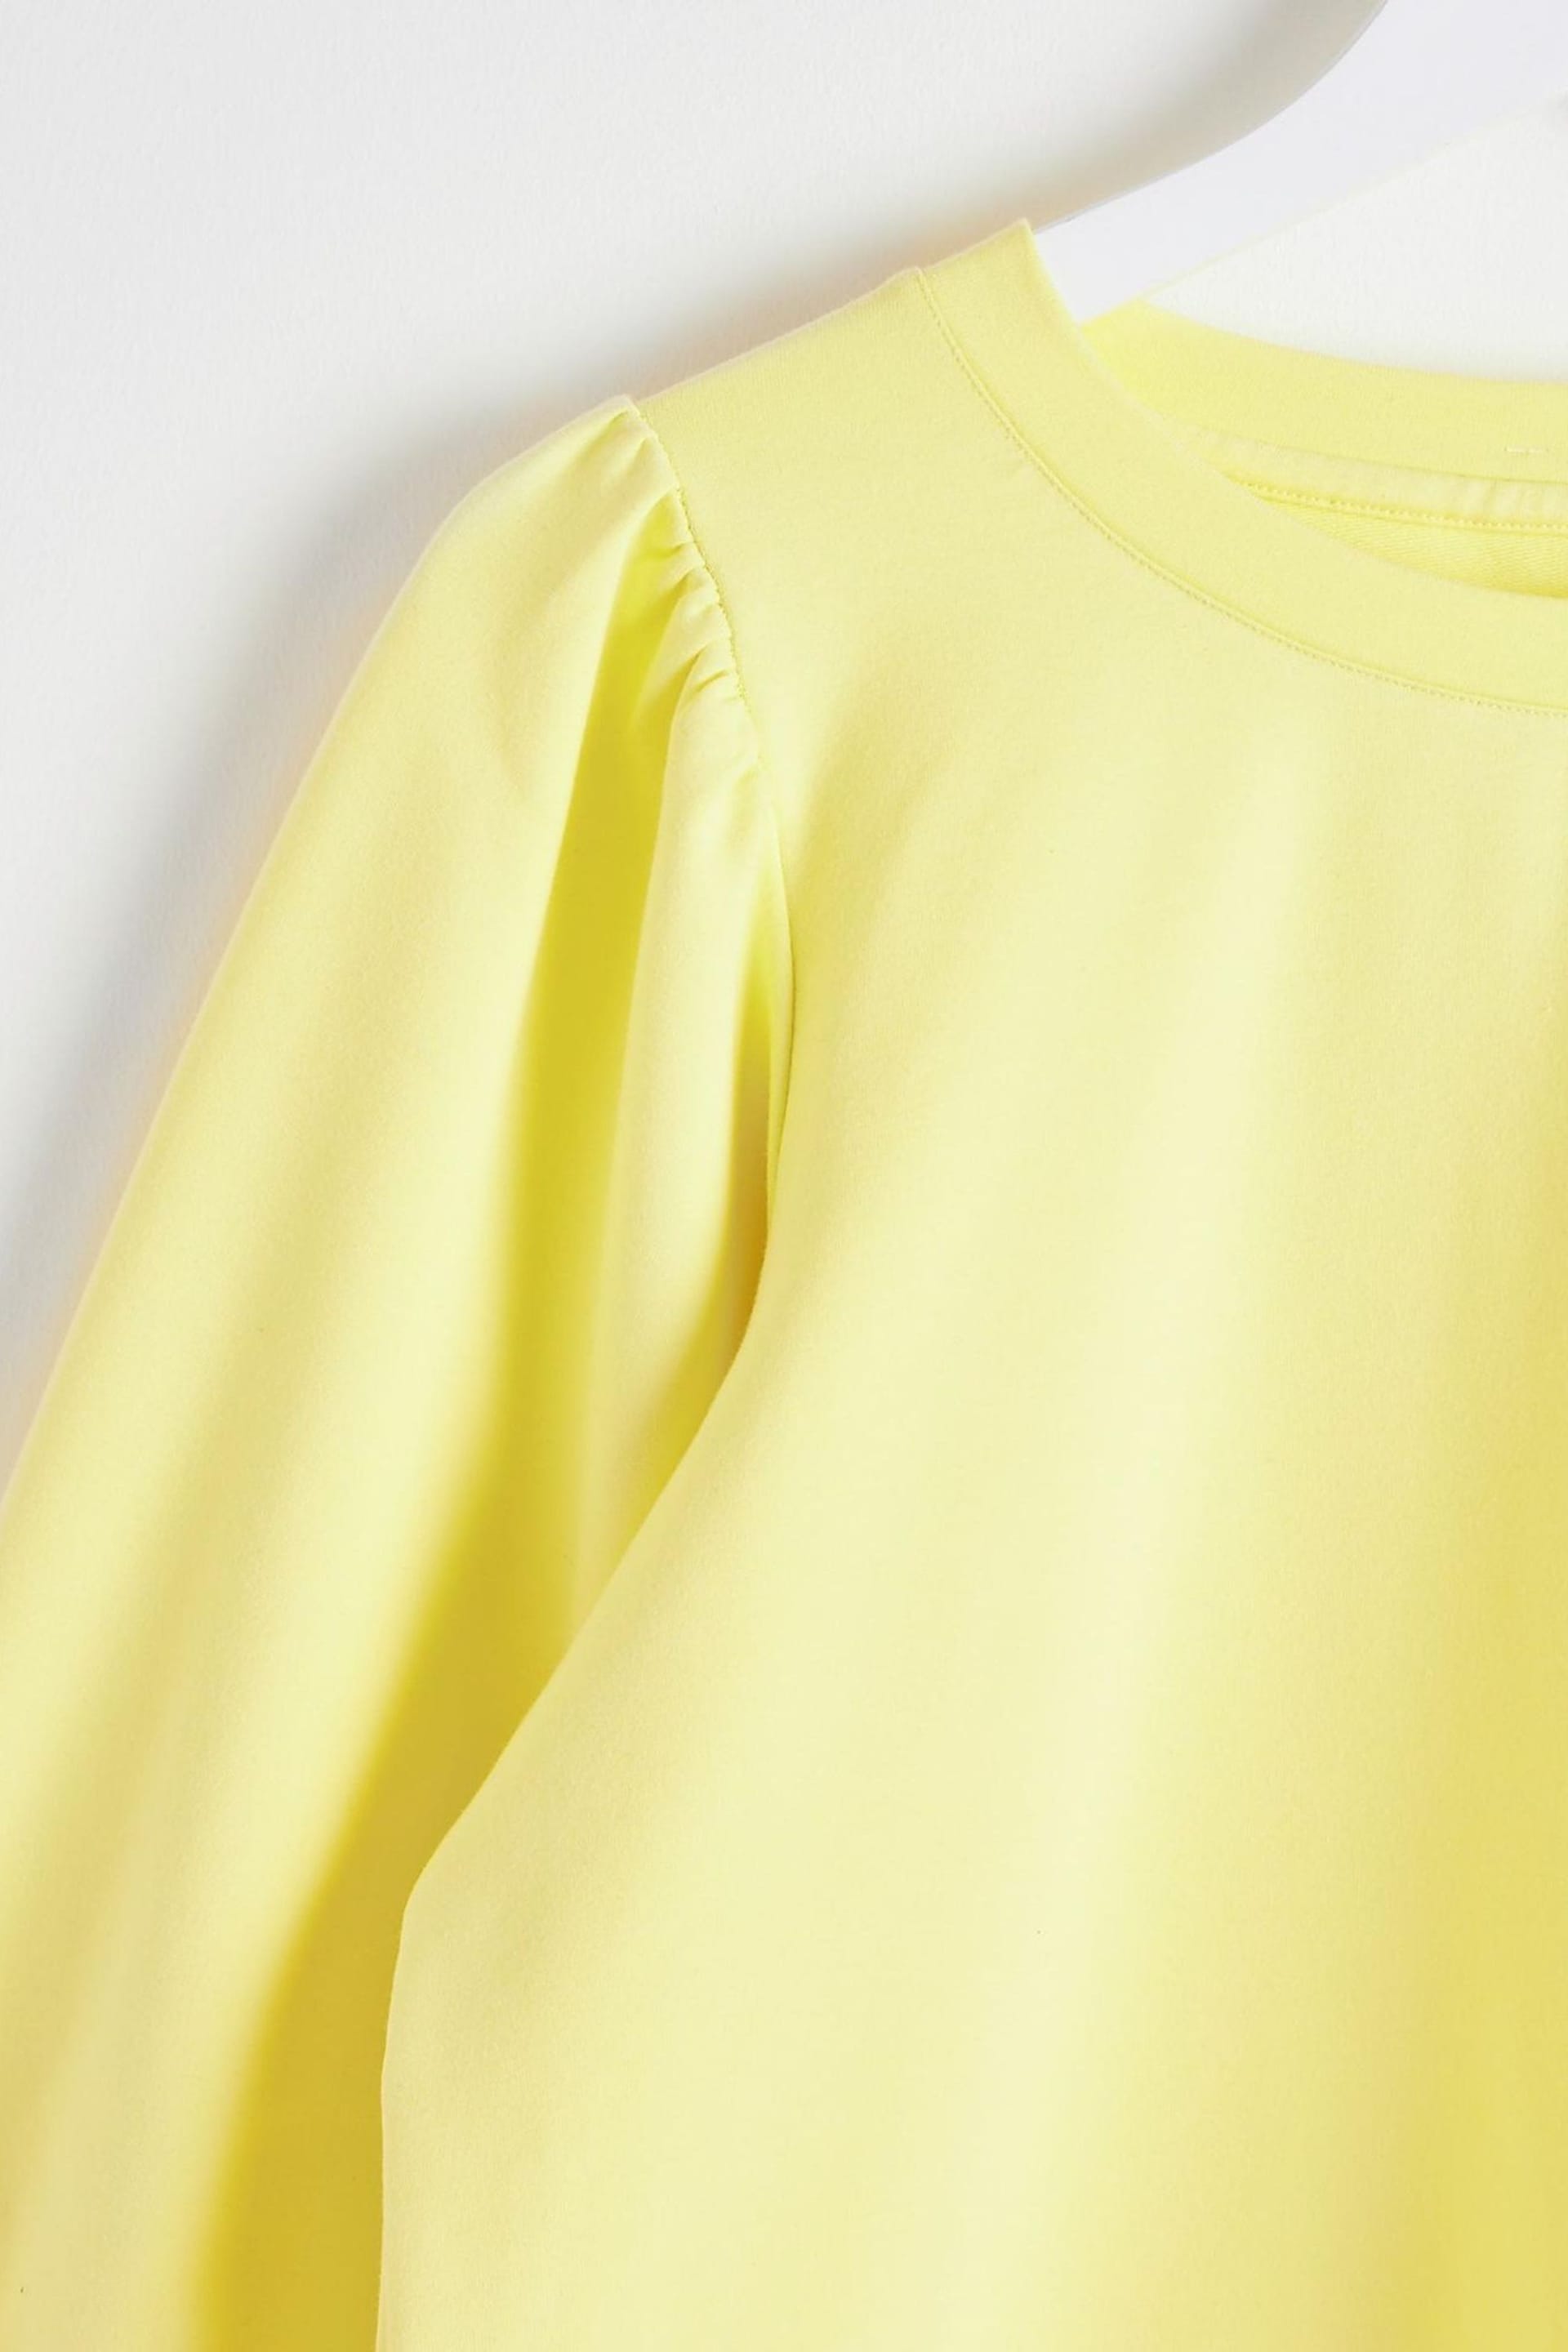 Oliver Bonas Yellow Puff Sleeve Pleated Sweatshirt - Image 4 of 5